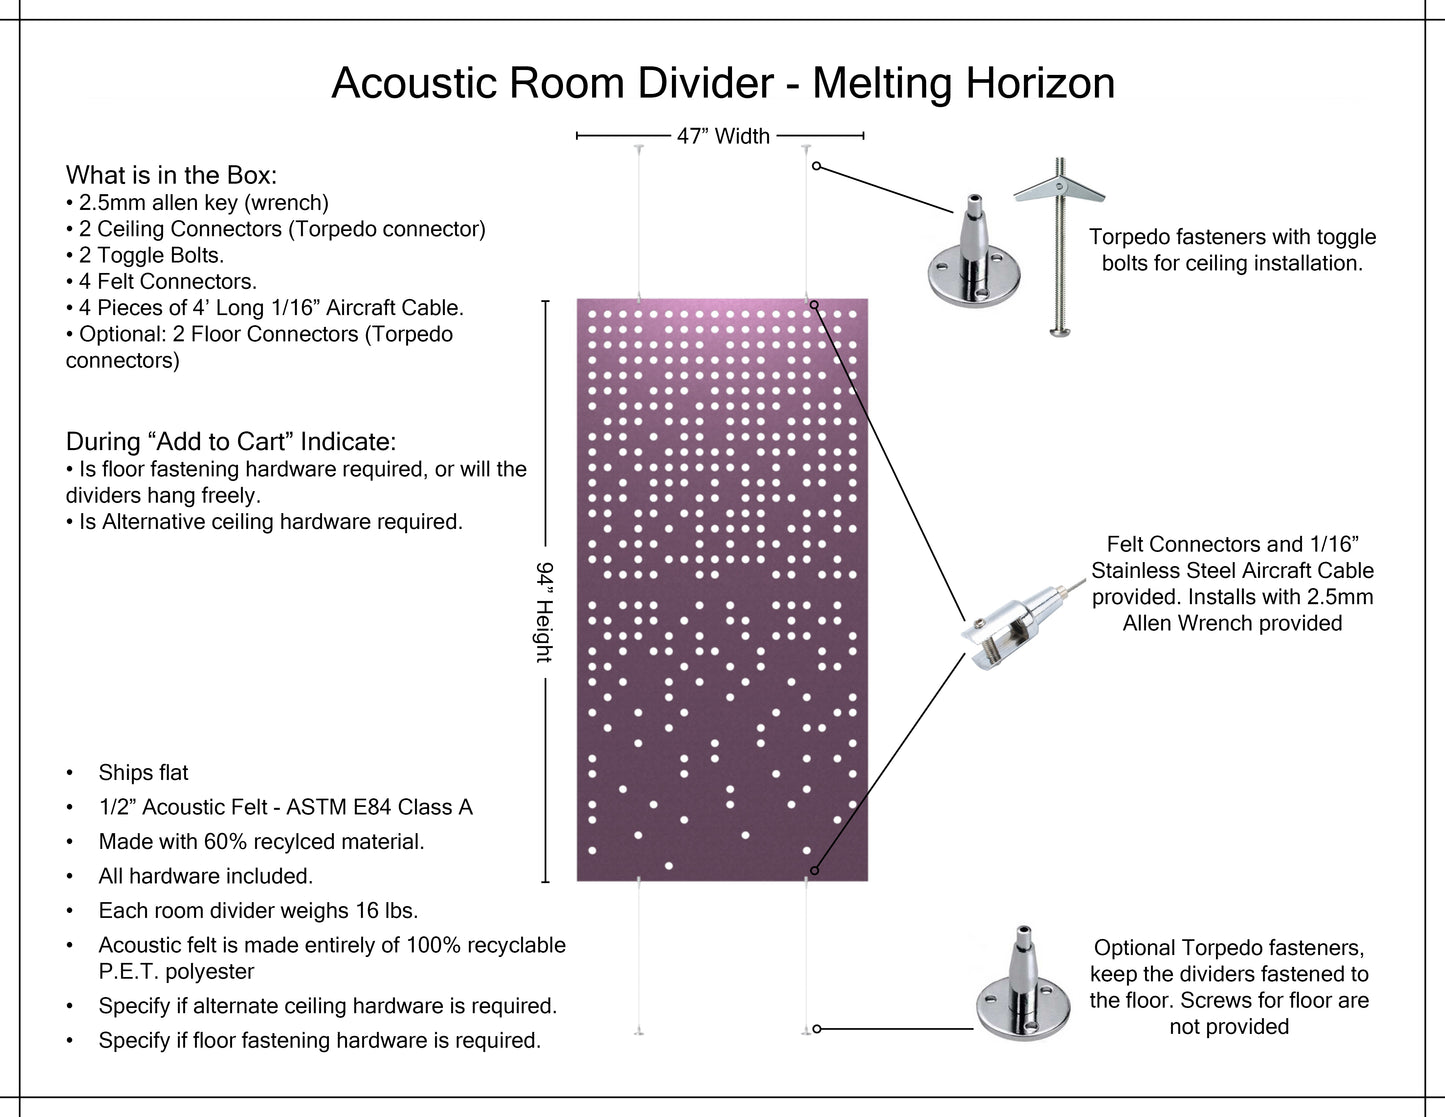 4x8 Acoustic Room Divider - Melting Horizon